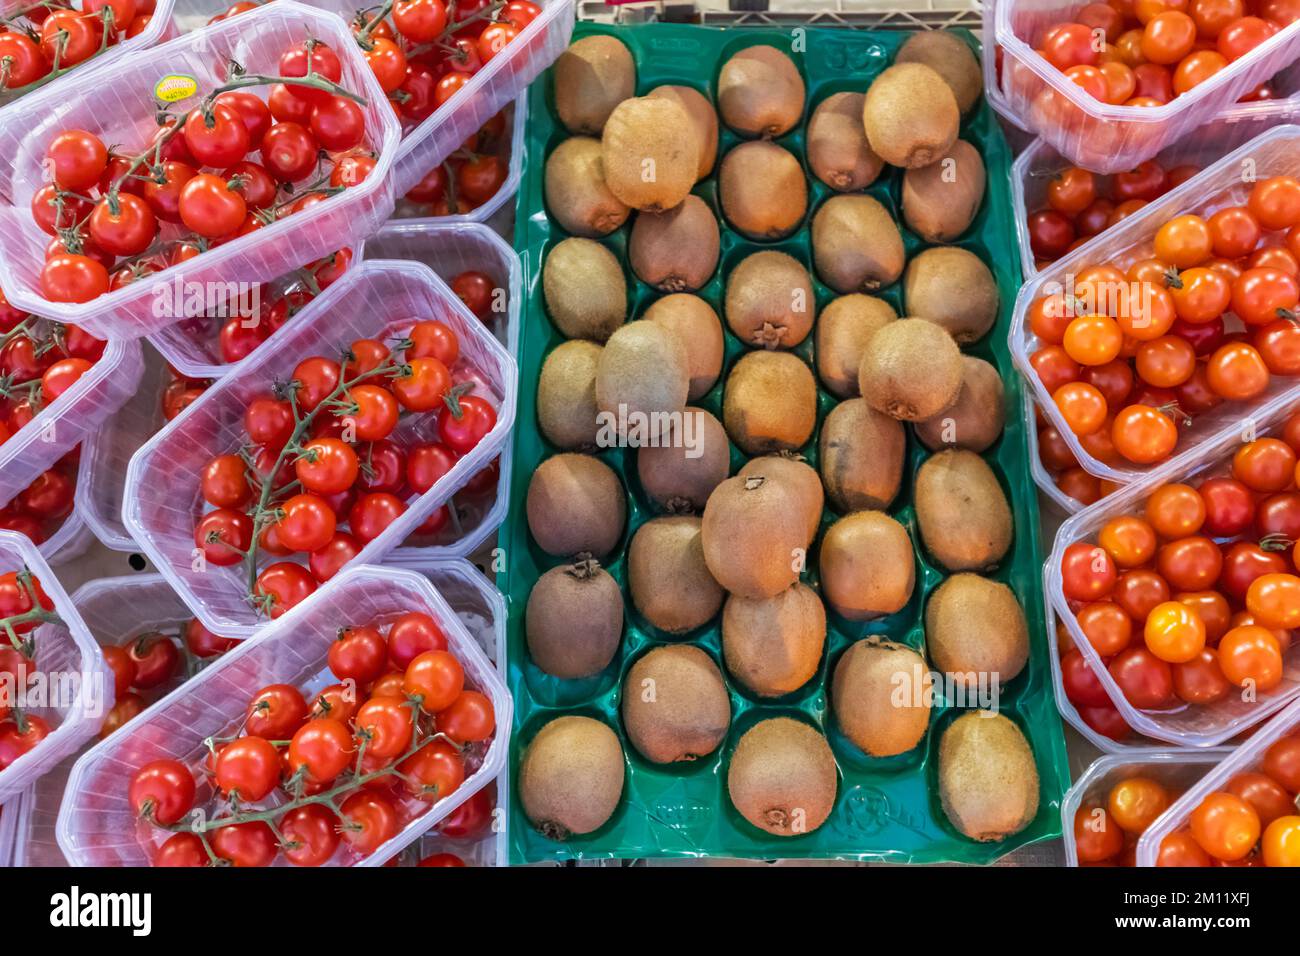 England, Dorset, Christchurch, Christchurch Market, Display of Kiwifruit and Tomatoes Stock Photo